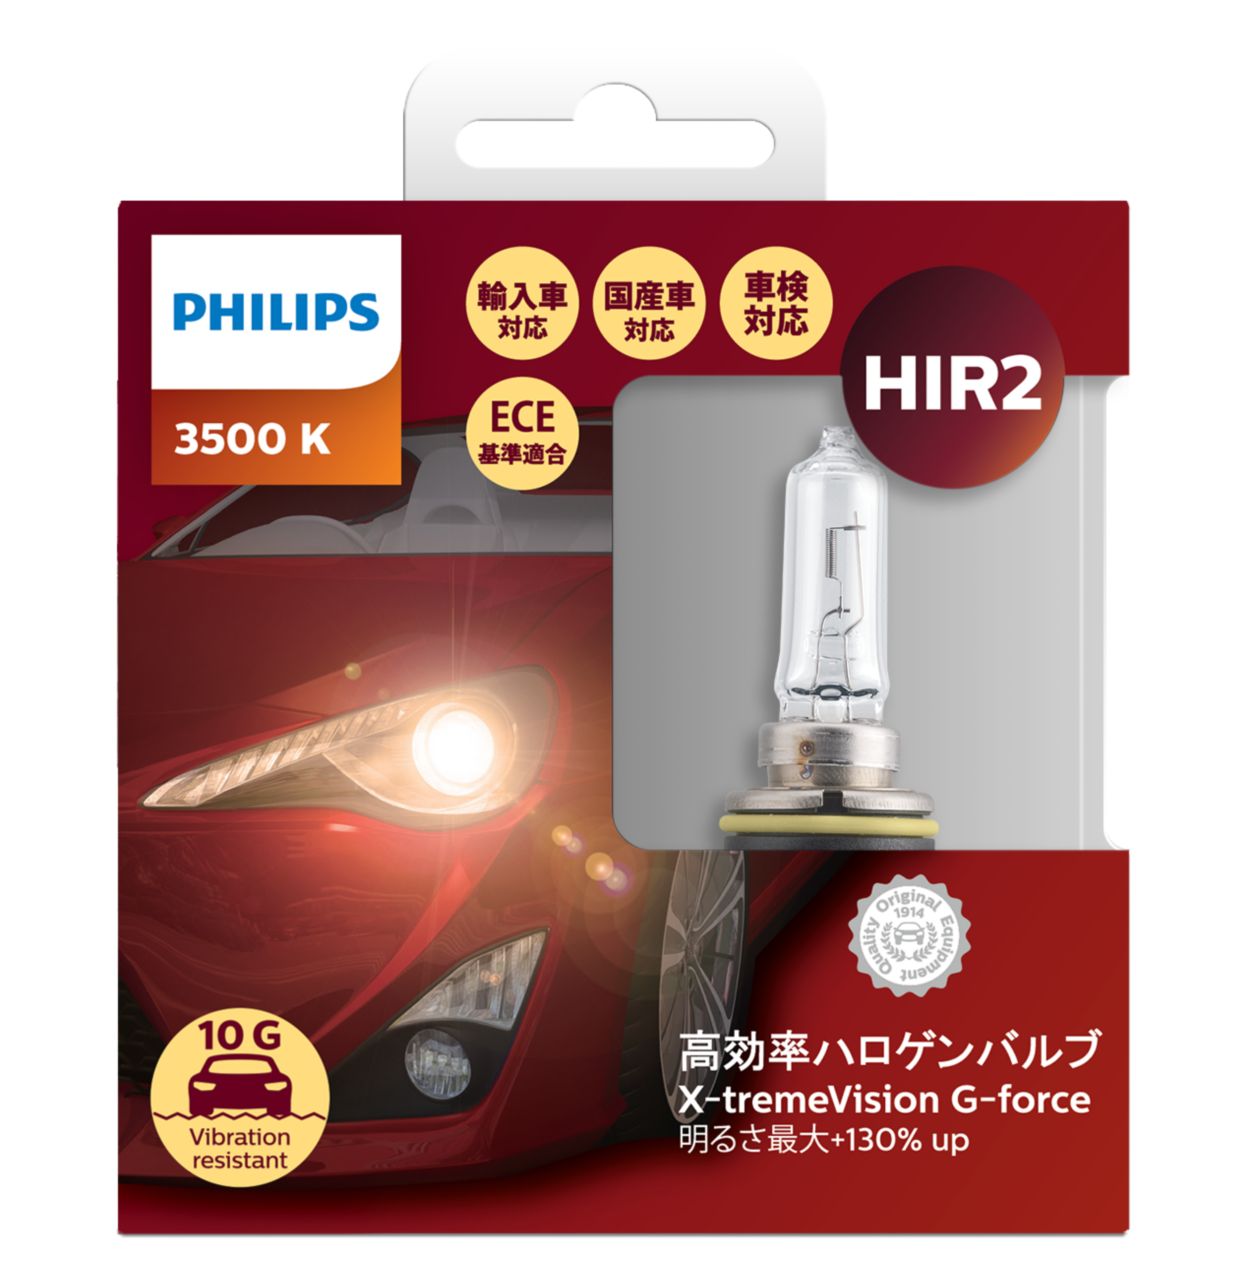 Philips H7 X-tremeVision G-force 12V 55W Halogen Car Headlight Bulbs Twin  Pack